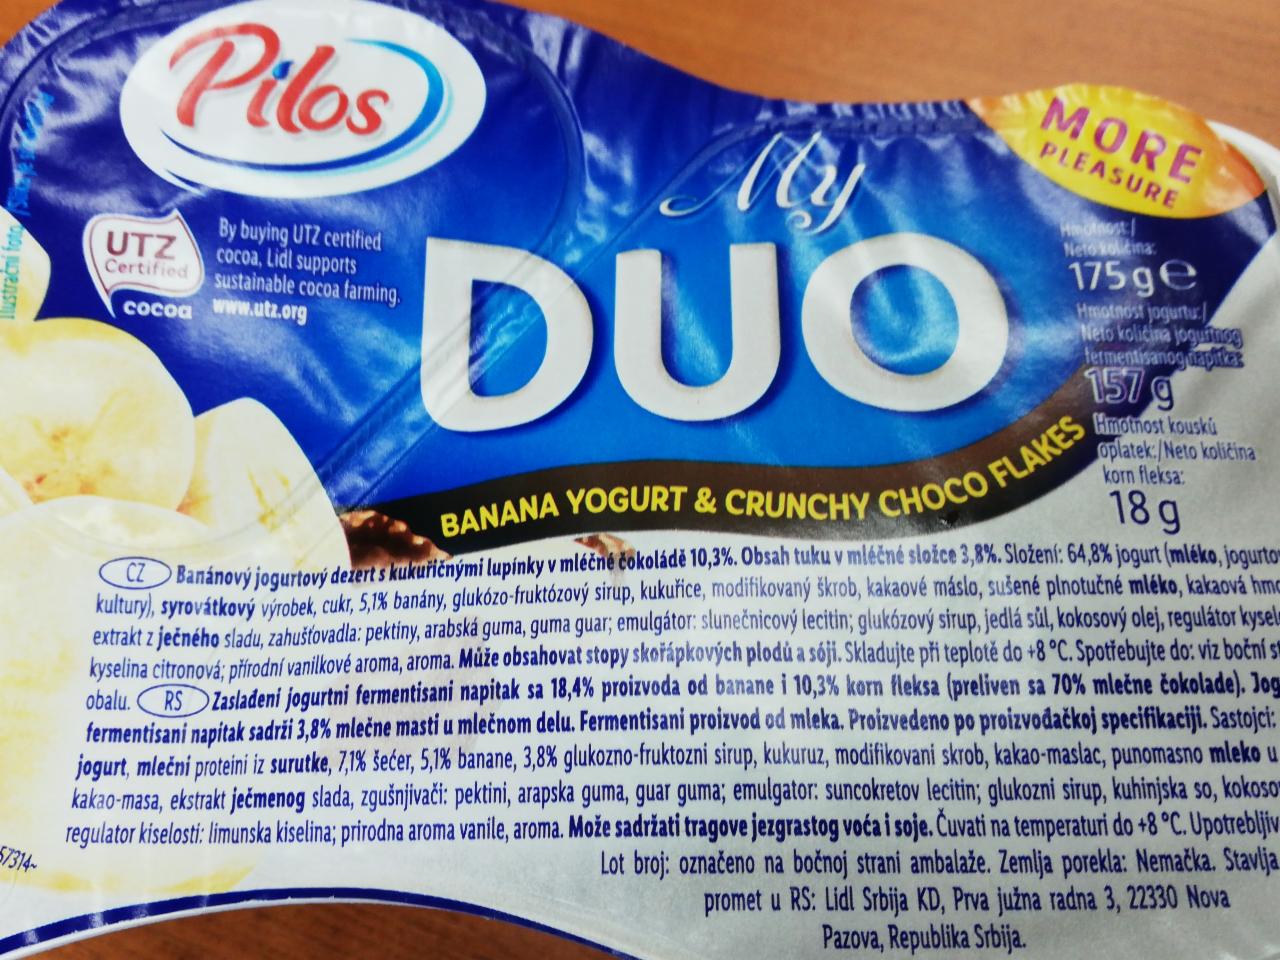 Fotografie - My duo banana yogurt & crunchy choco flakes Pilos